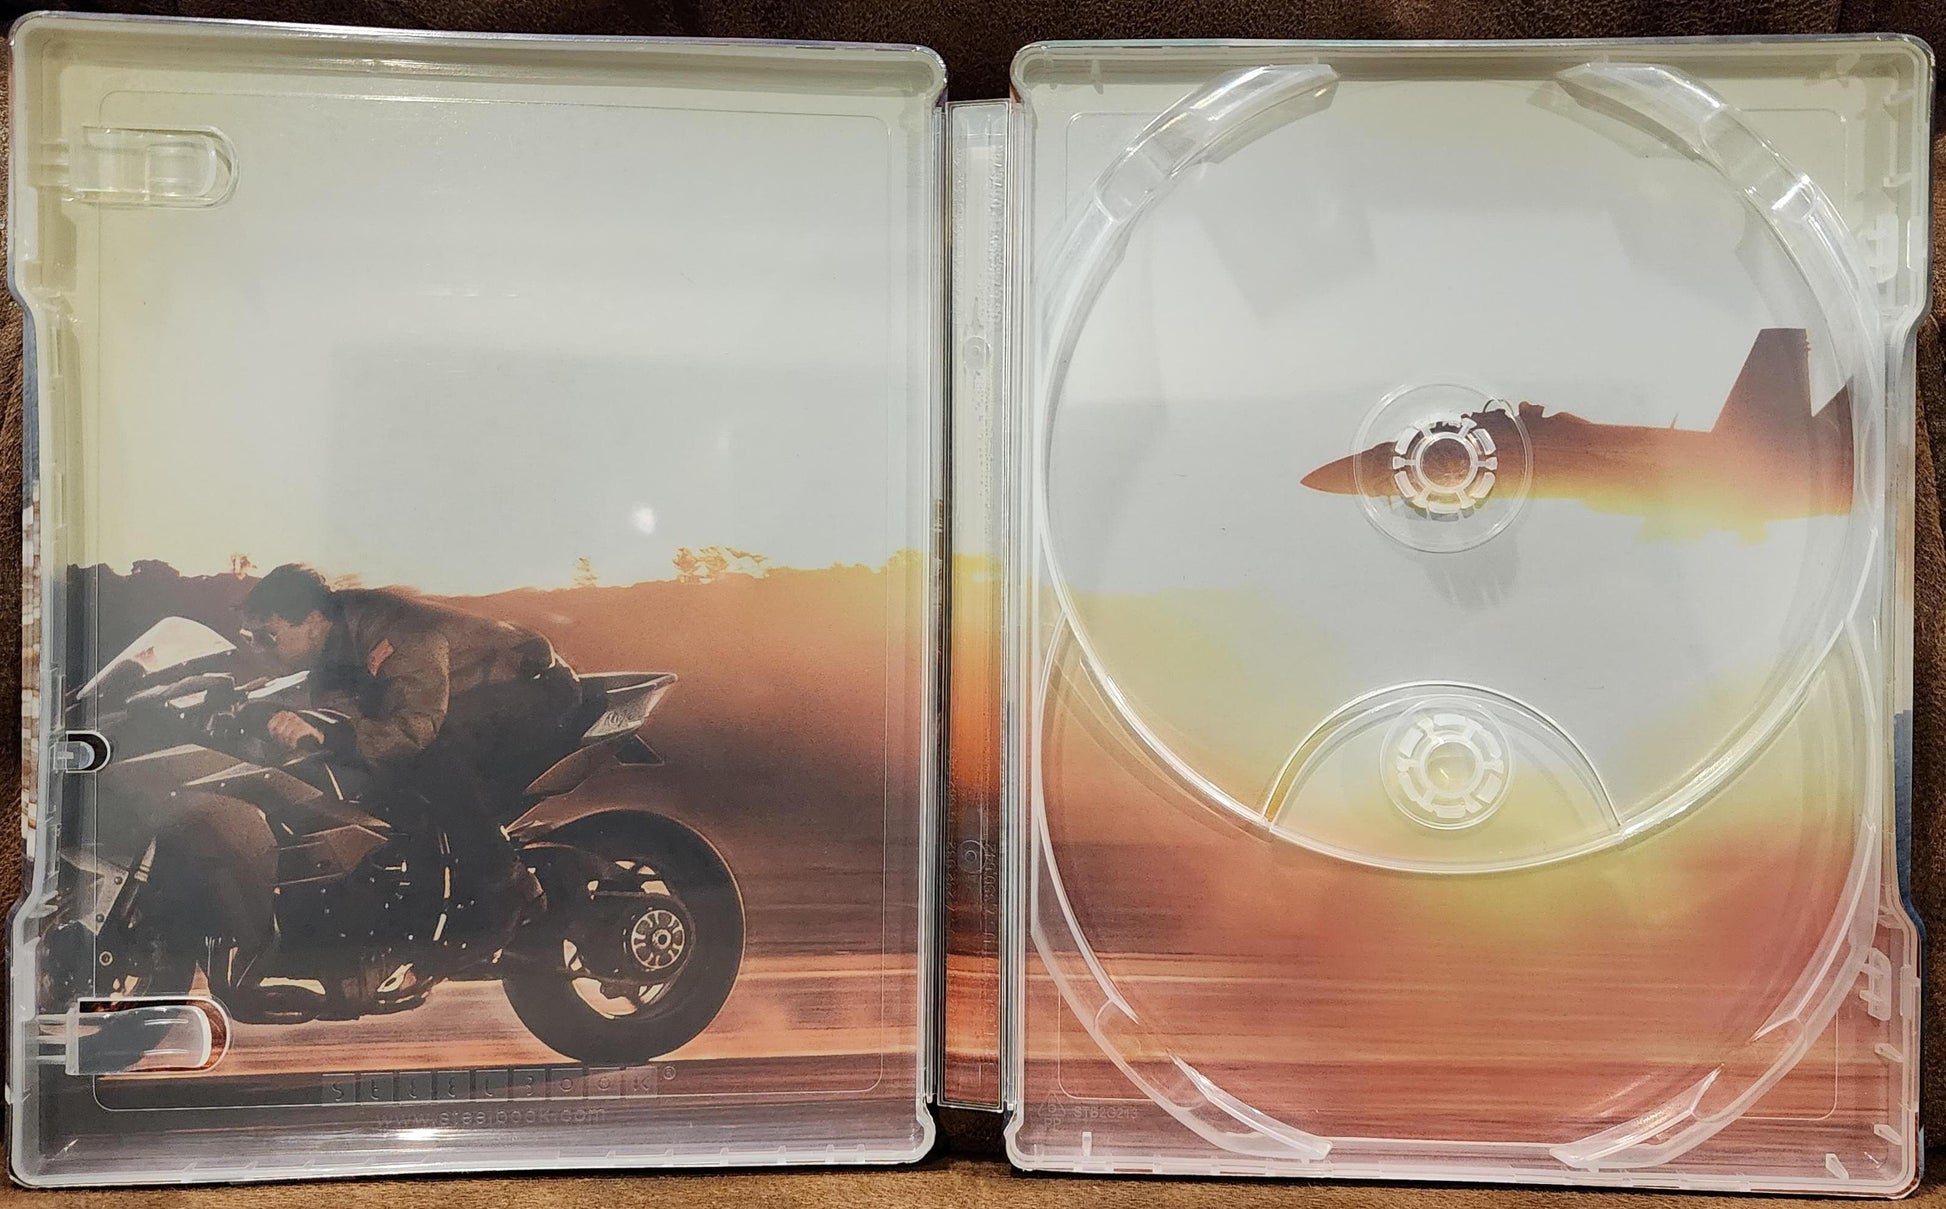 Top Gun: Maverick Steelbook (4K UHD+Blu-ray+Digital) Factory Sealed